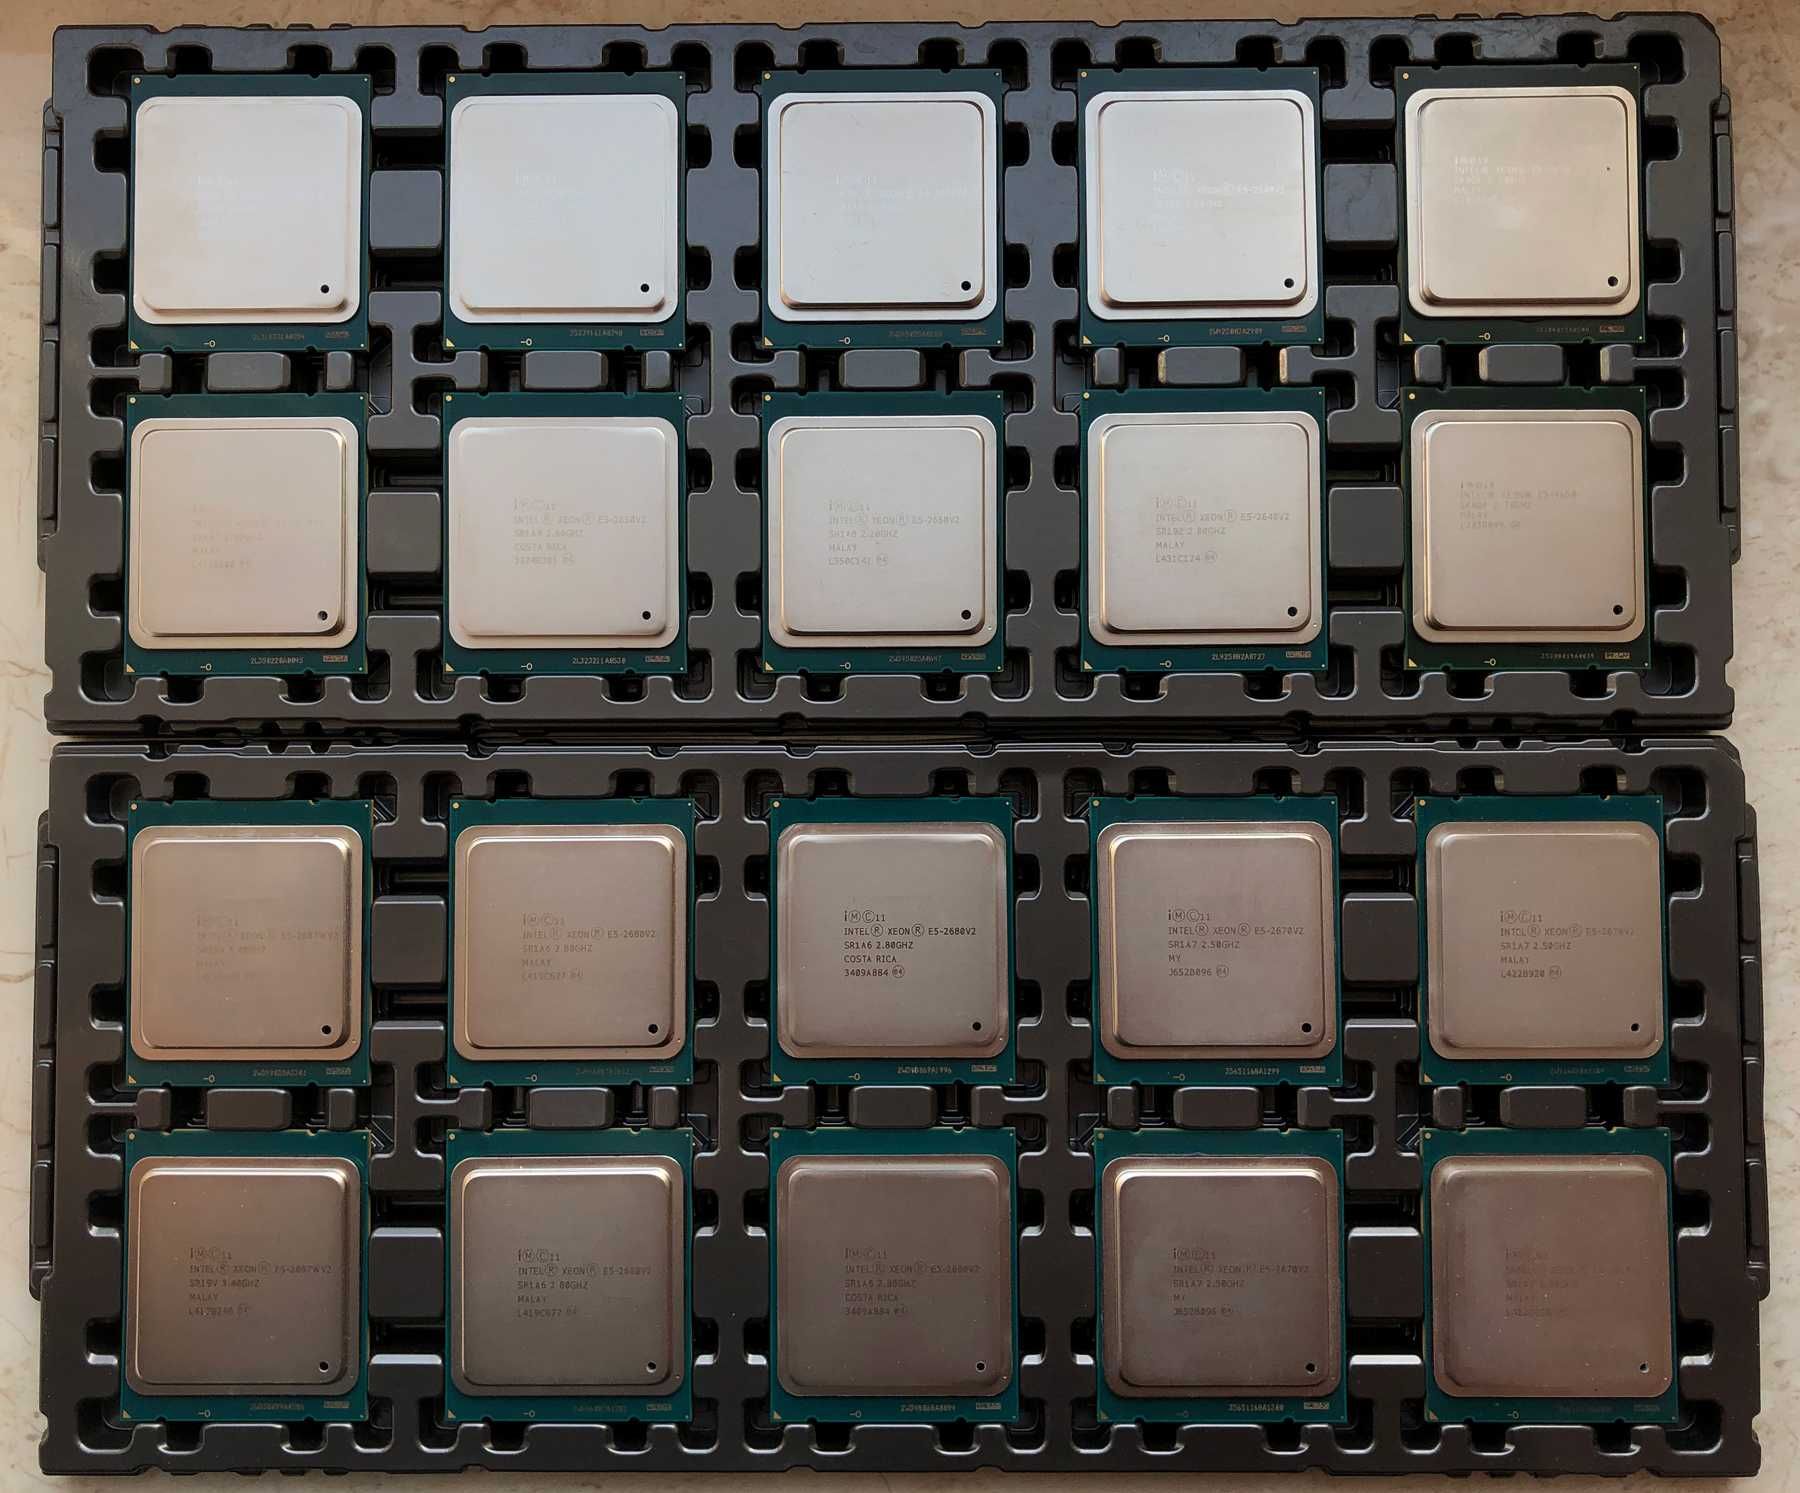 Процессор Intel Xeon E5-1630 v4 и другие 2011 v2 v3 2697